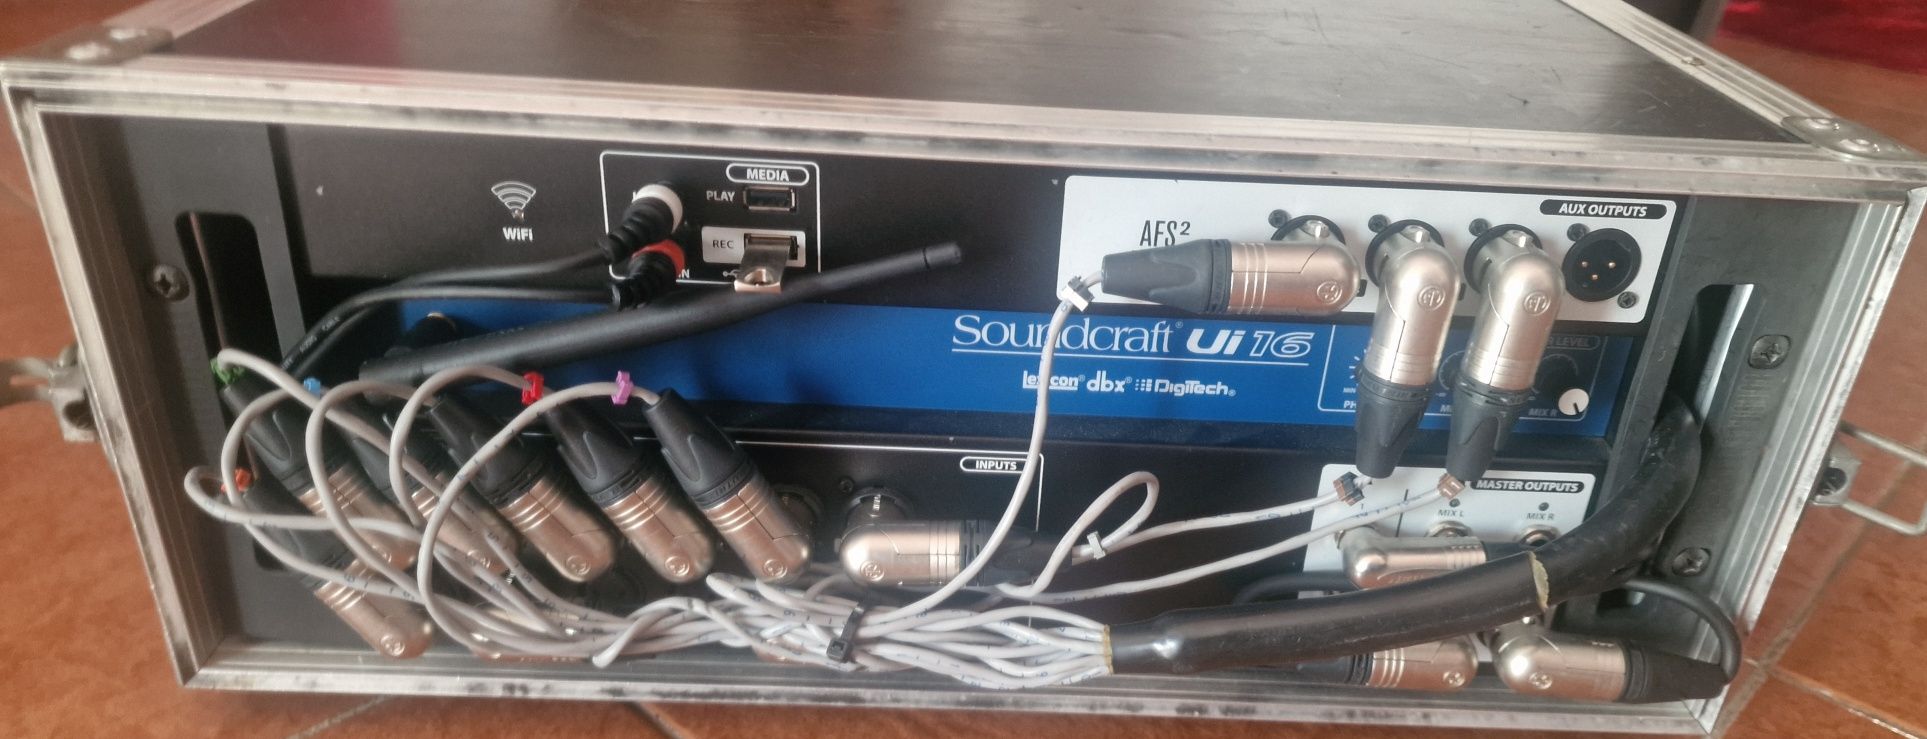 Mesa de mistura soundcraft UI16